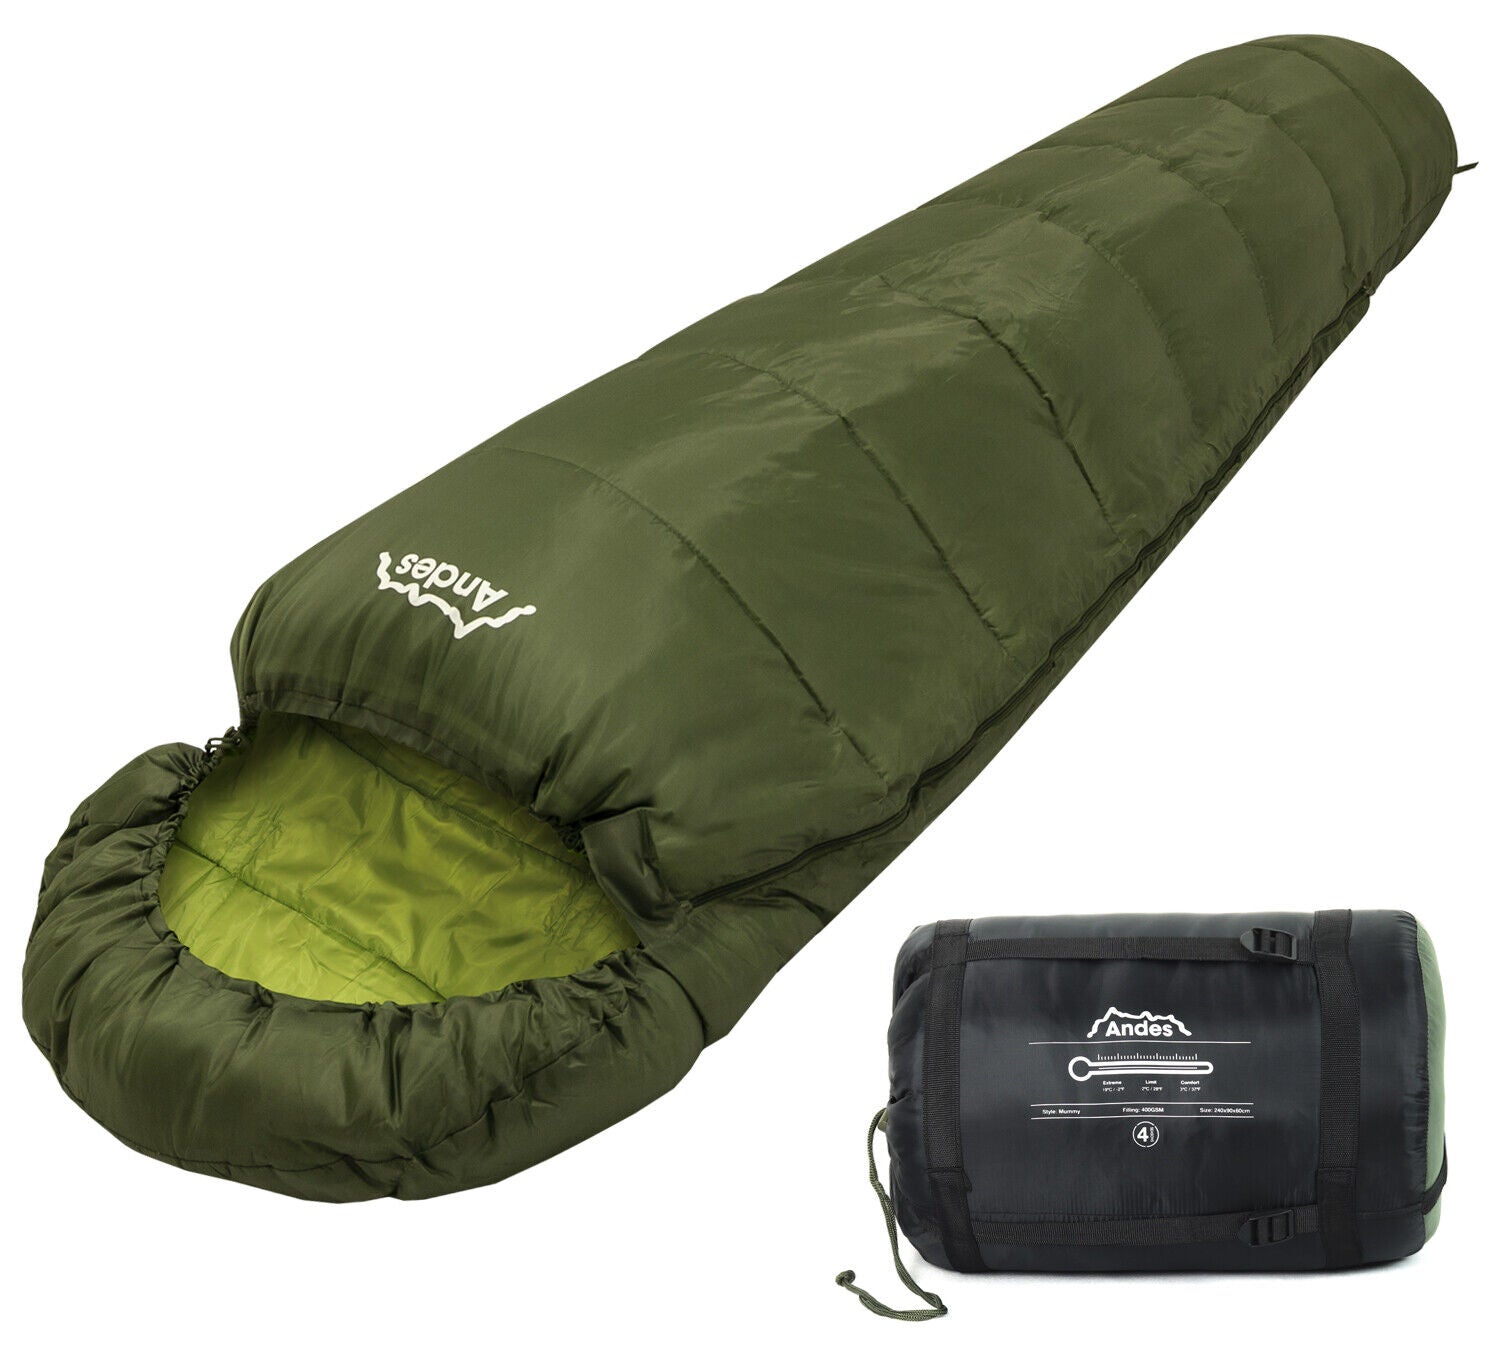 XL Camping Mummy Sleeping Bag The Andes Nevado 400